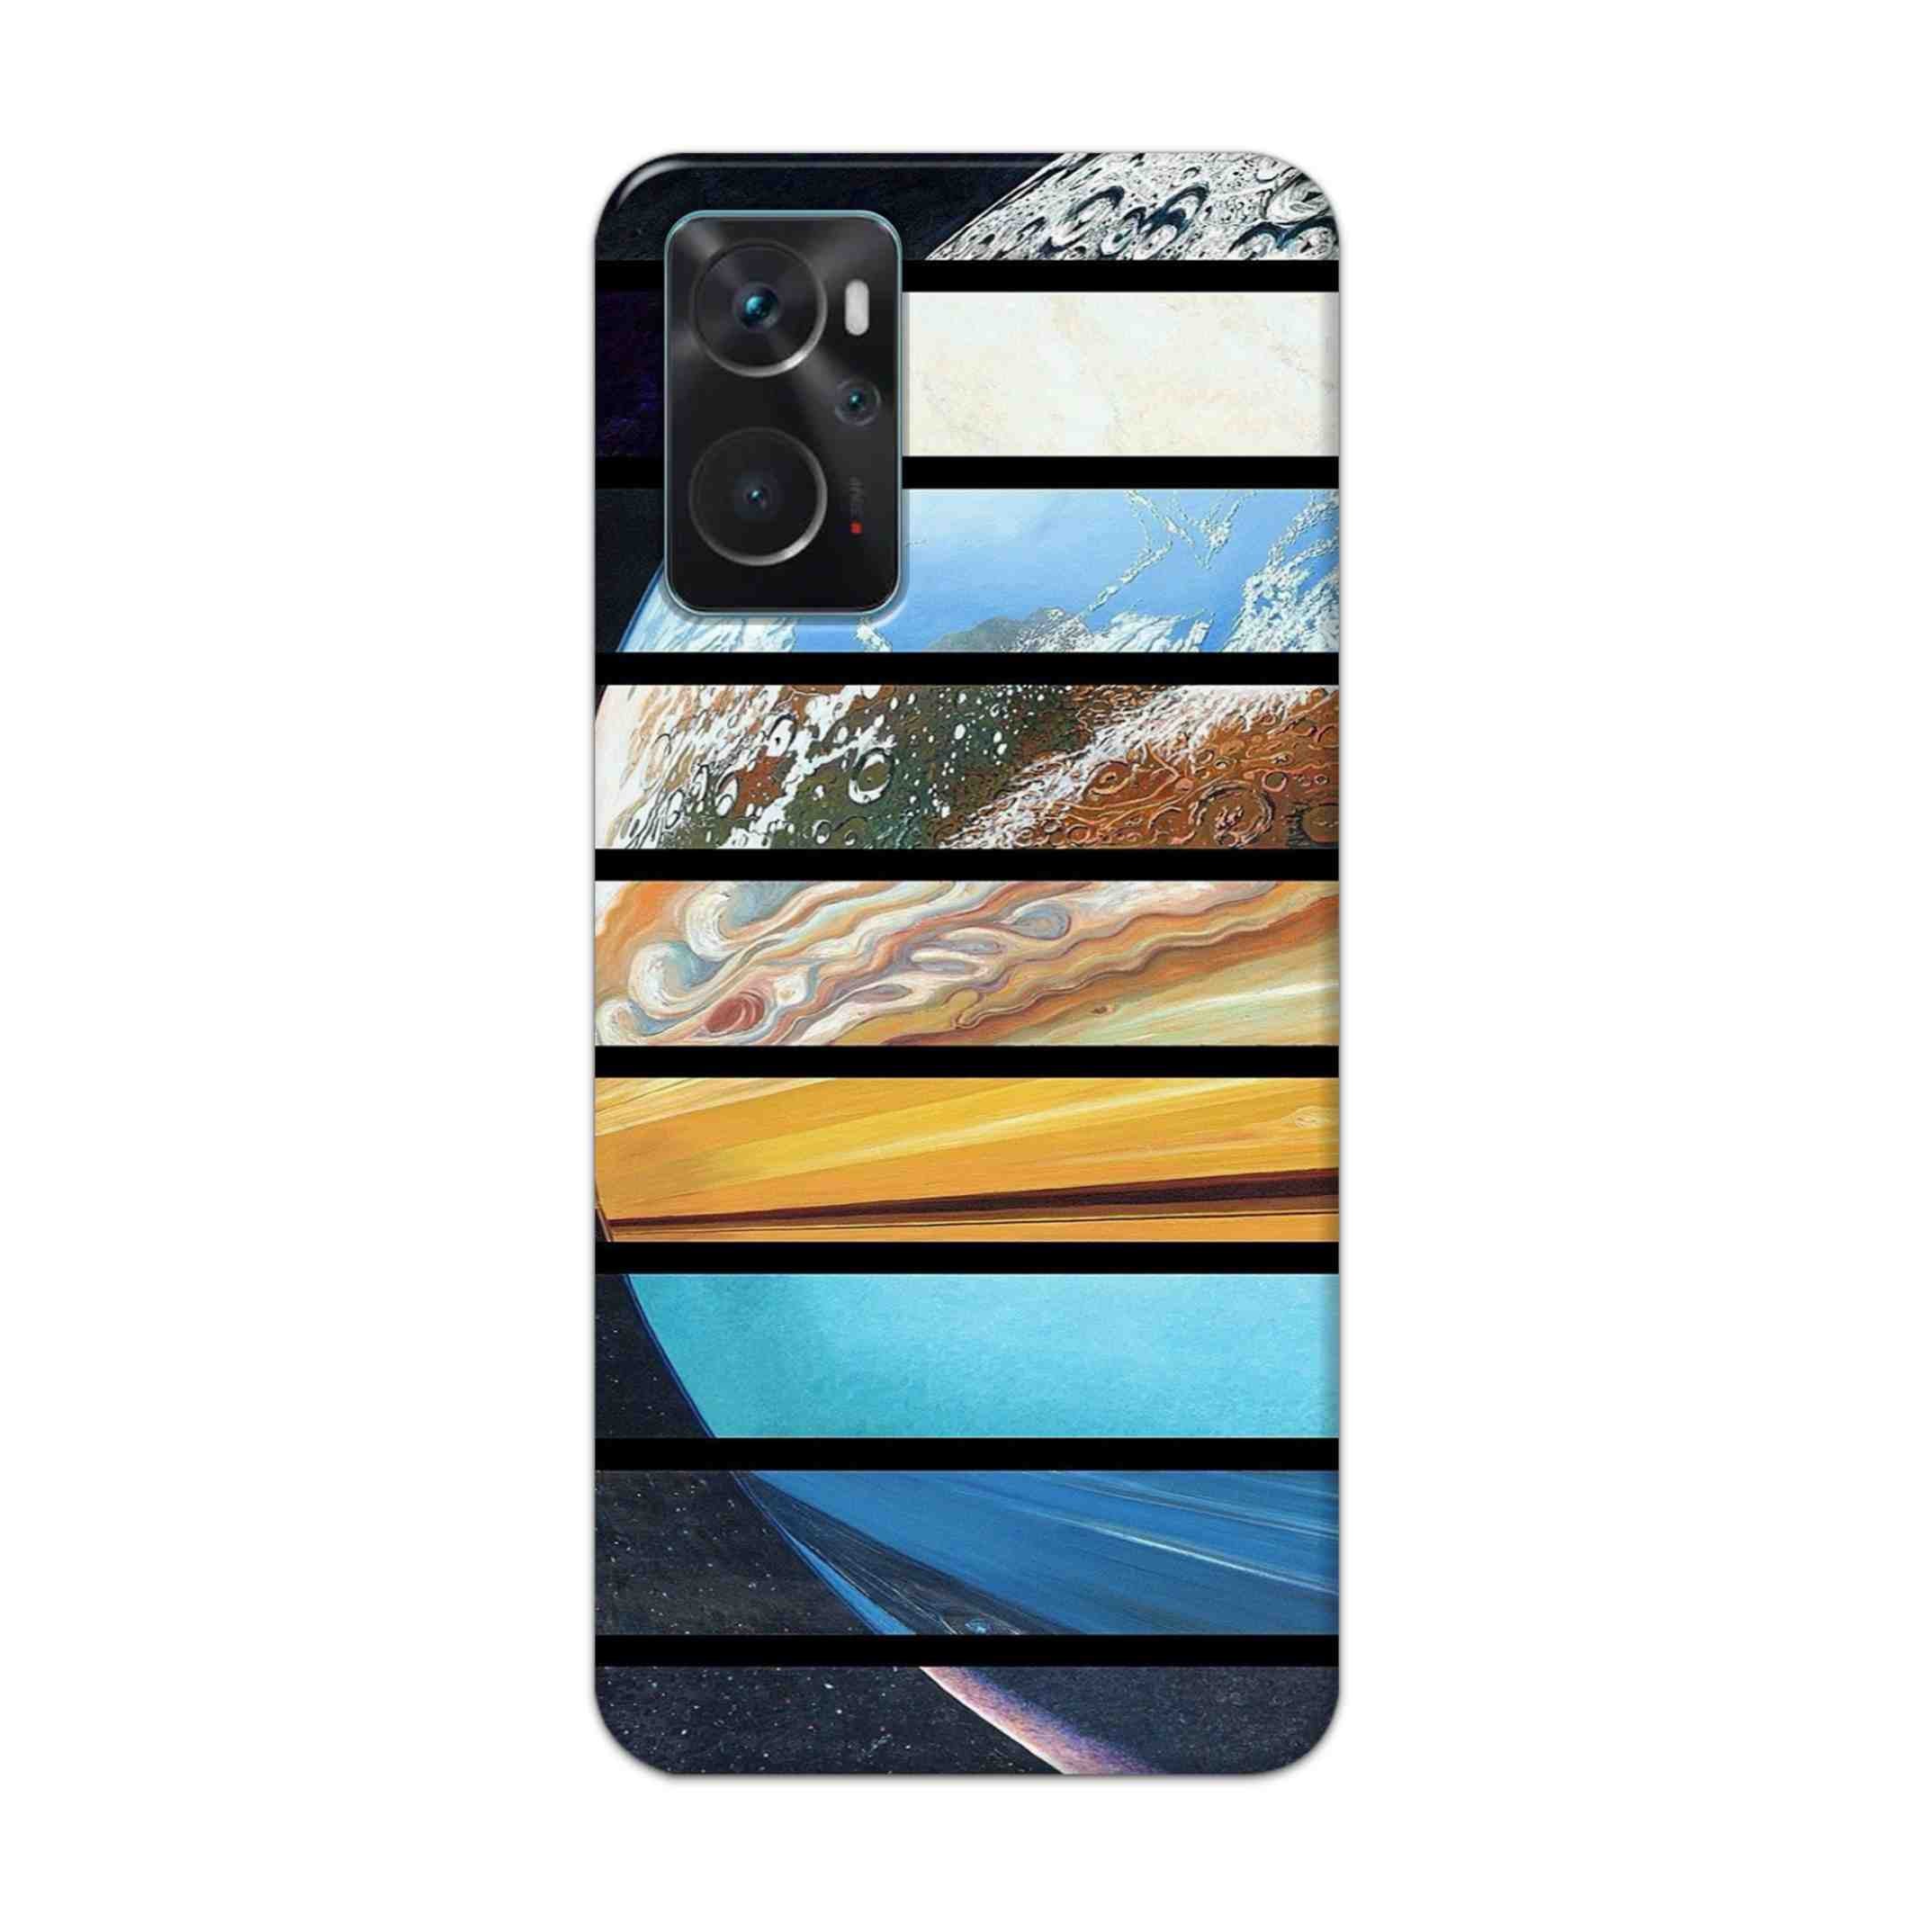 Buy Colourful Earth Hard Back Mobile Phone Case Cover For Oppo K10 Online